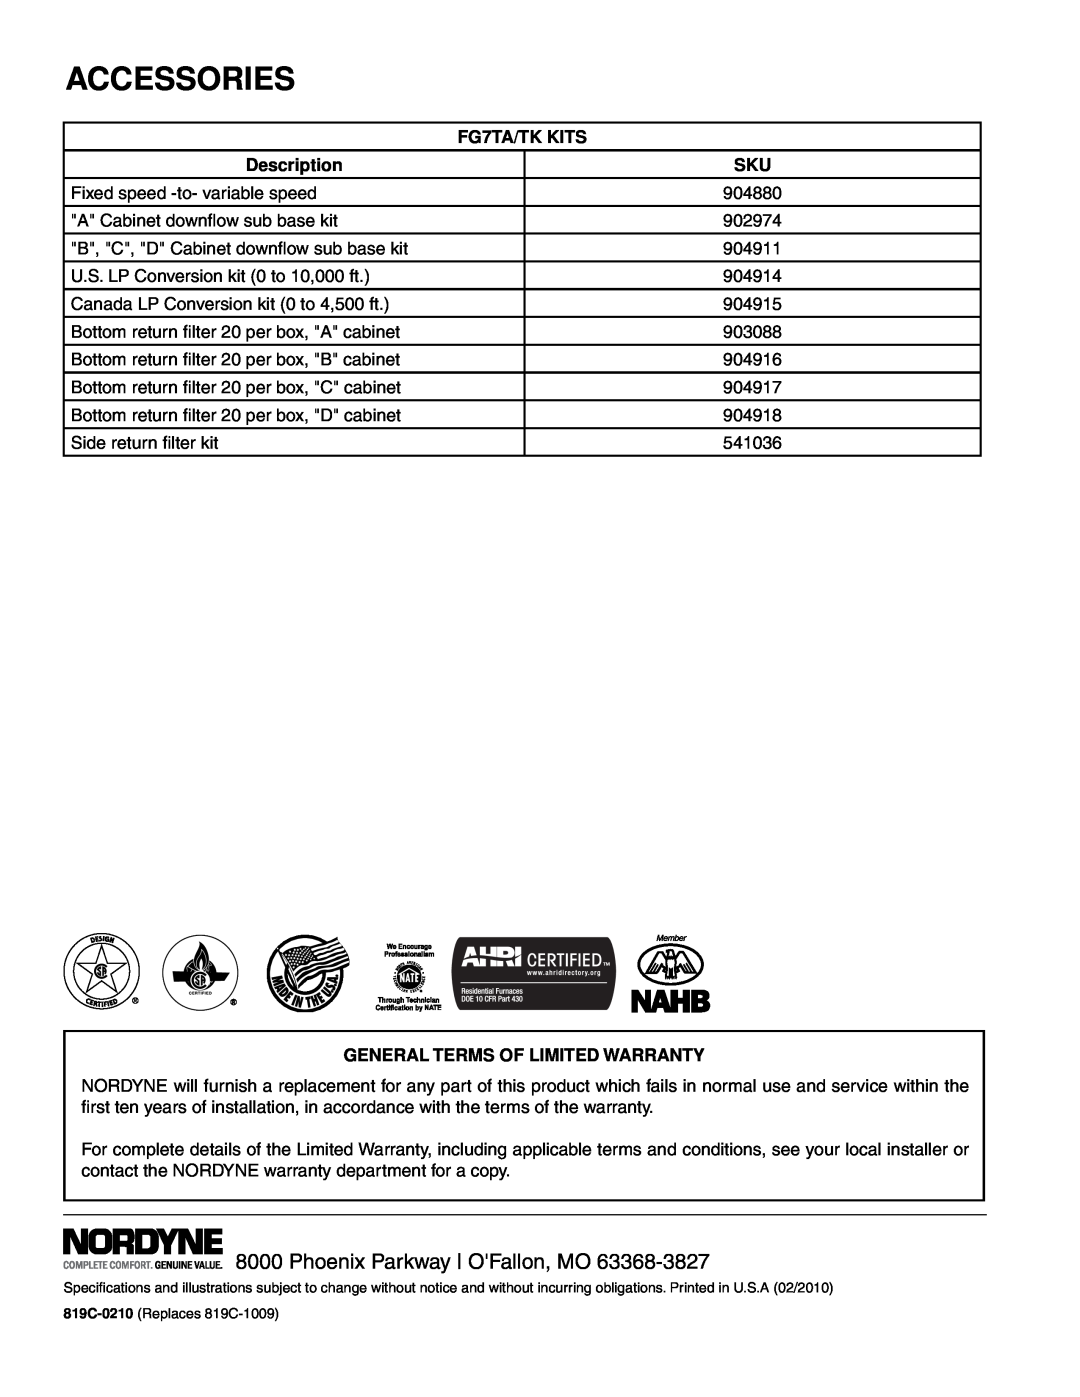 Nordyne warranty Accessories, Phoenix Parkway OFallon, MO, FG7TA/TK KITS, Description, General Terms Of Limited Warranty 